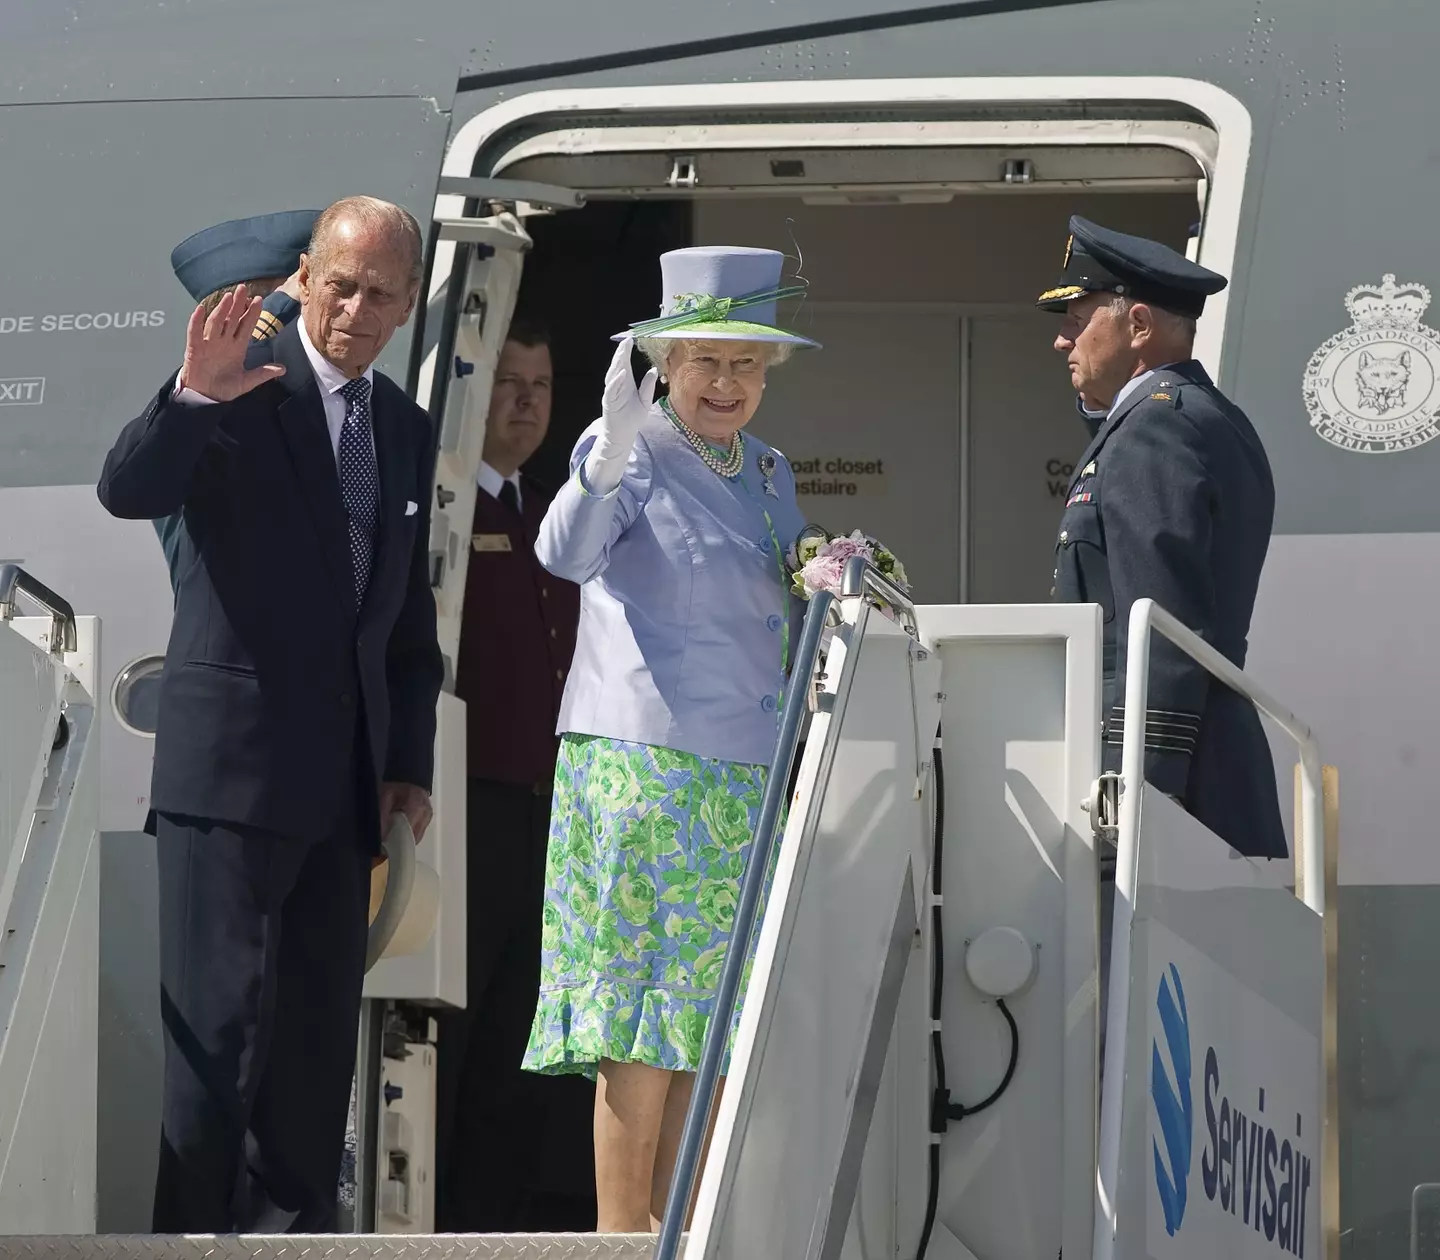 Queen Elizabeth's funeral is set to go ahead on Monday 19 September.